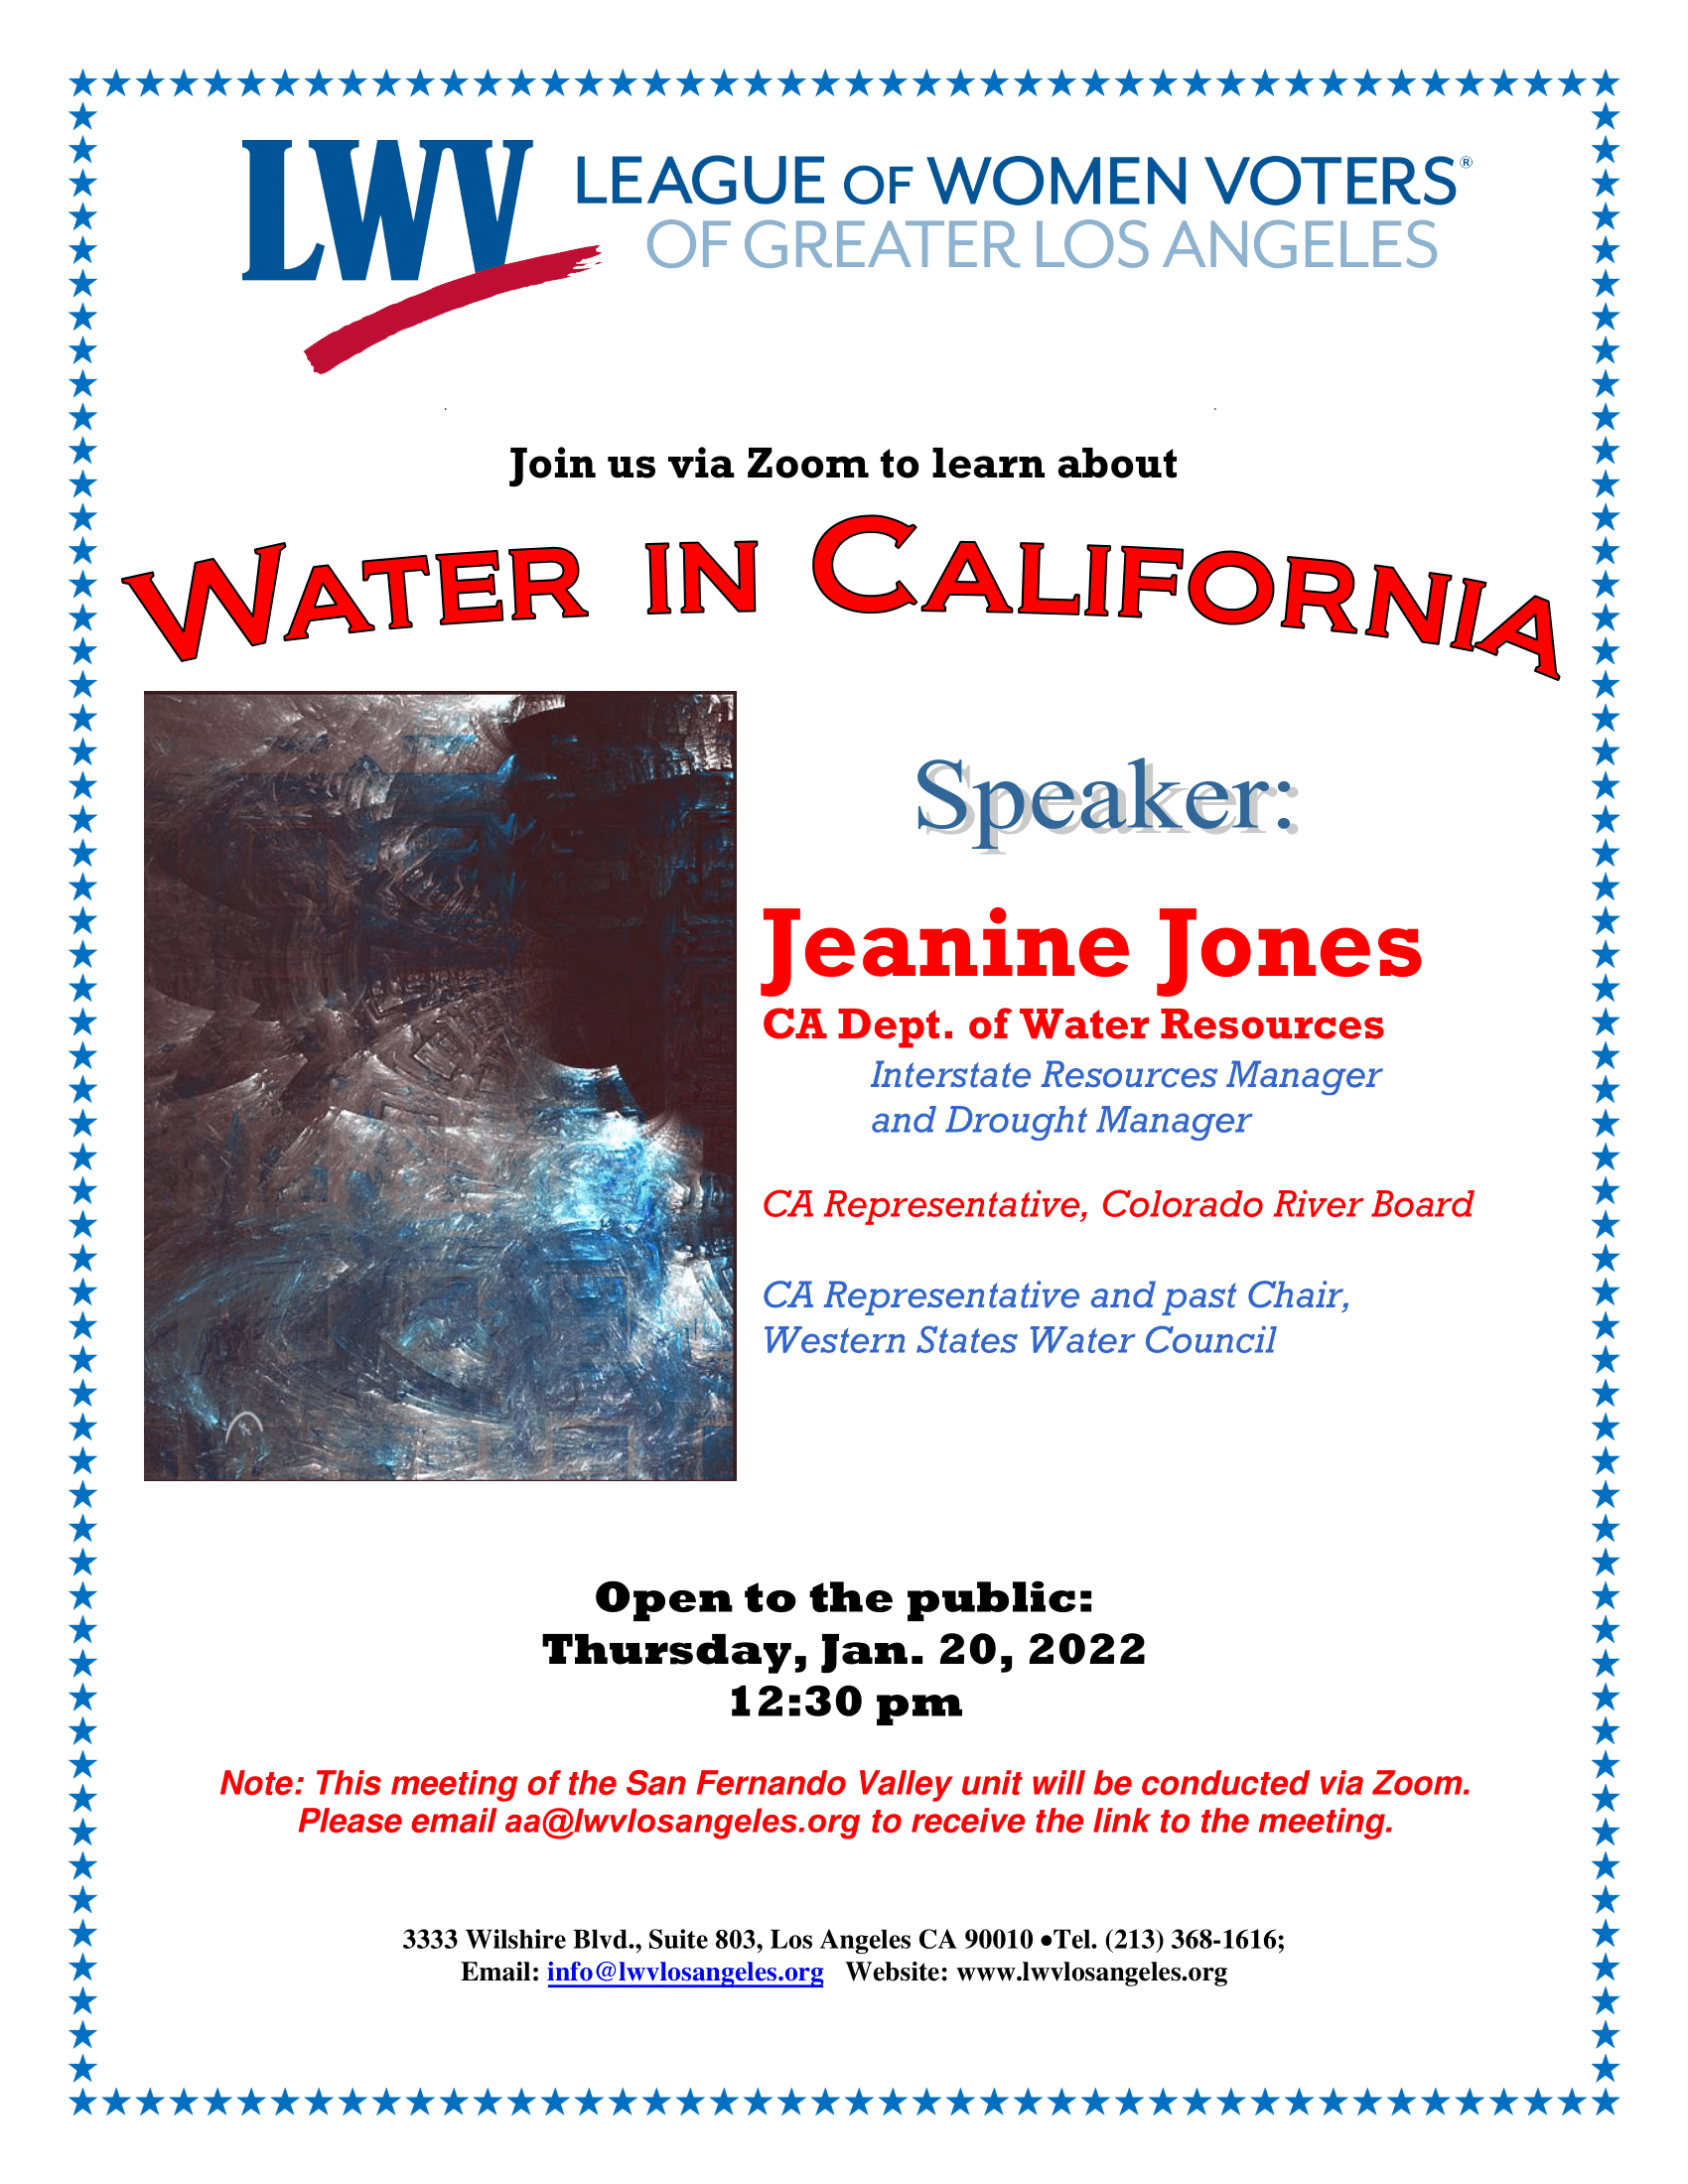 Water in California Flyer